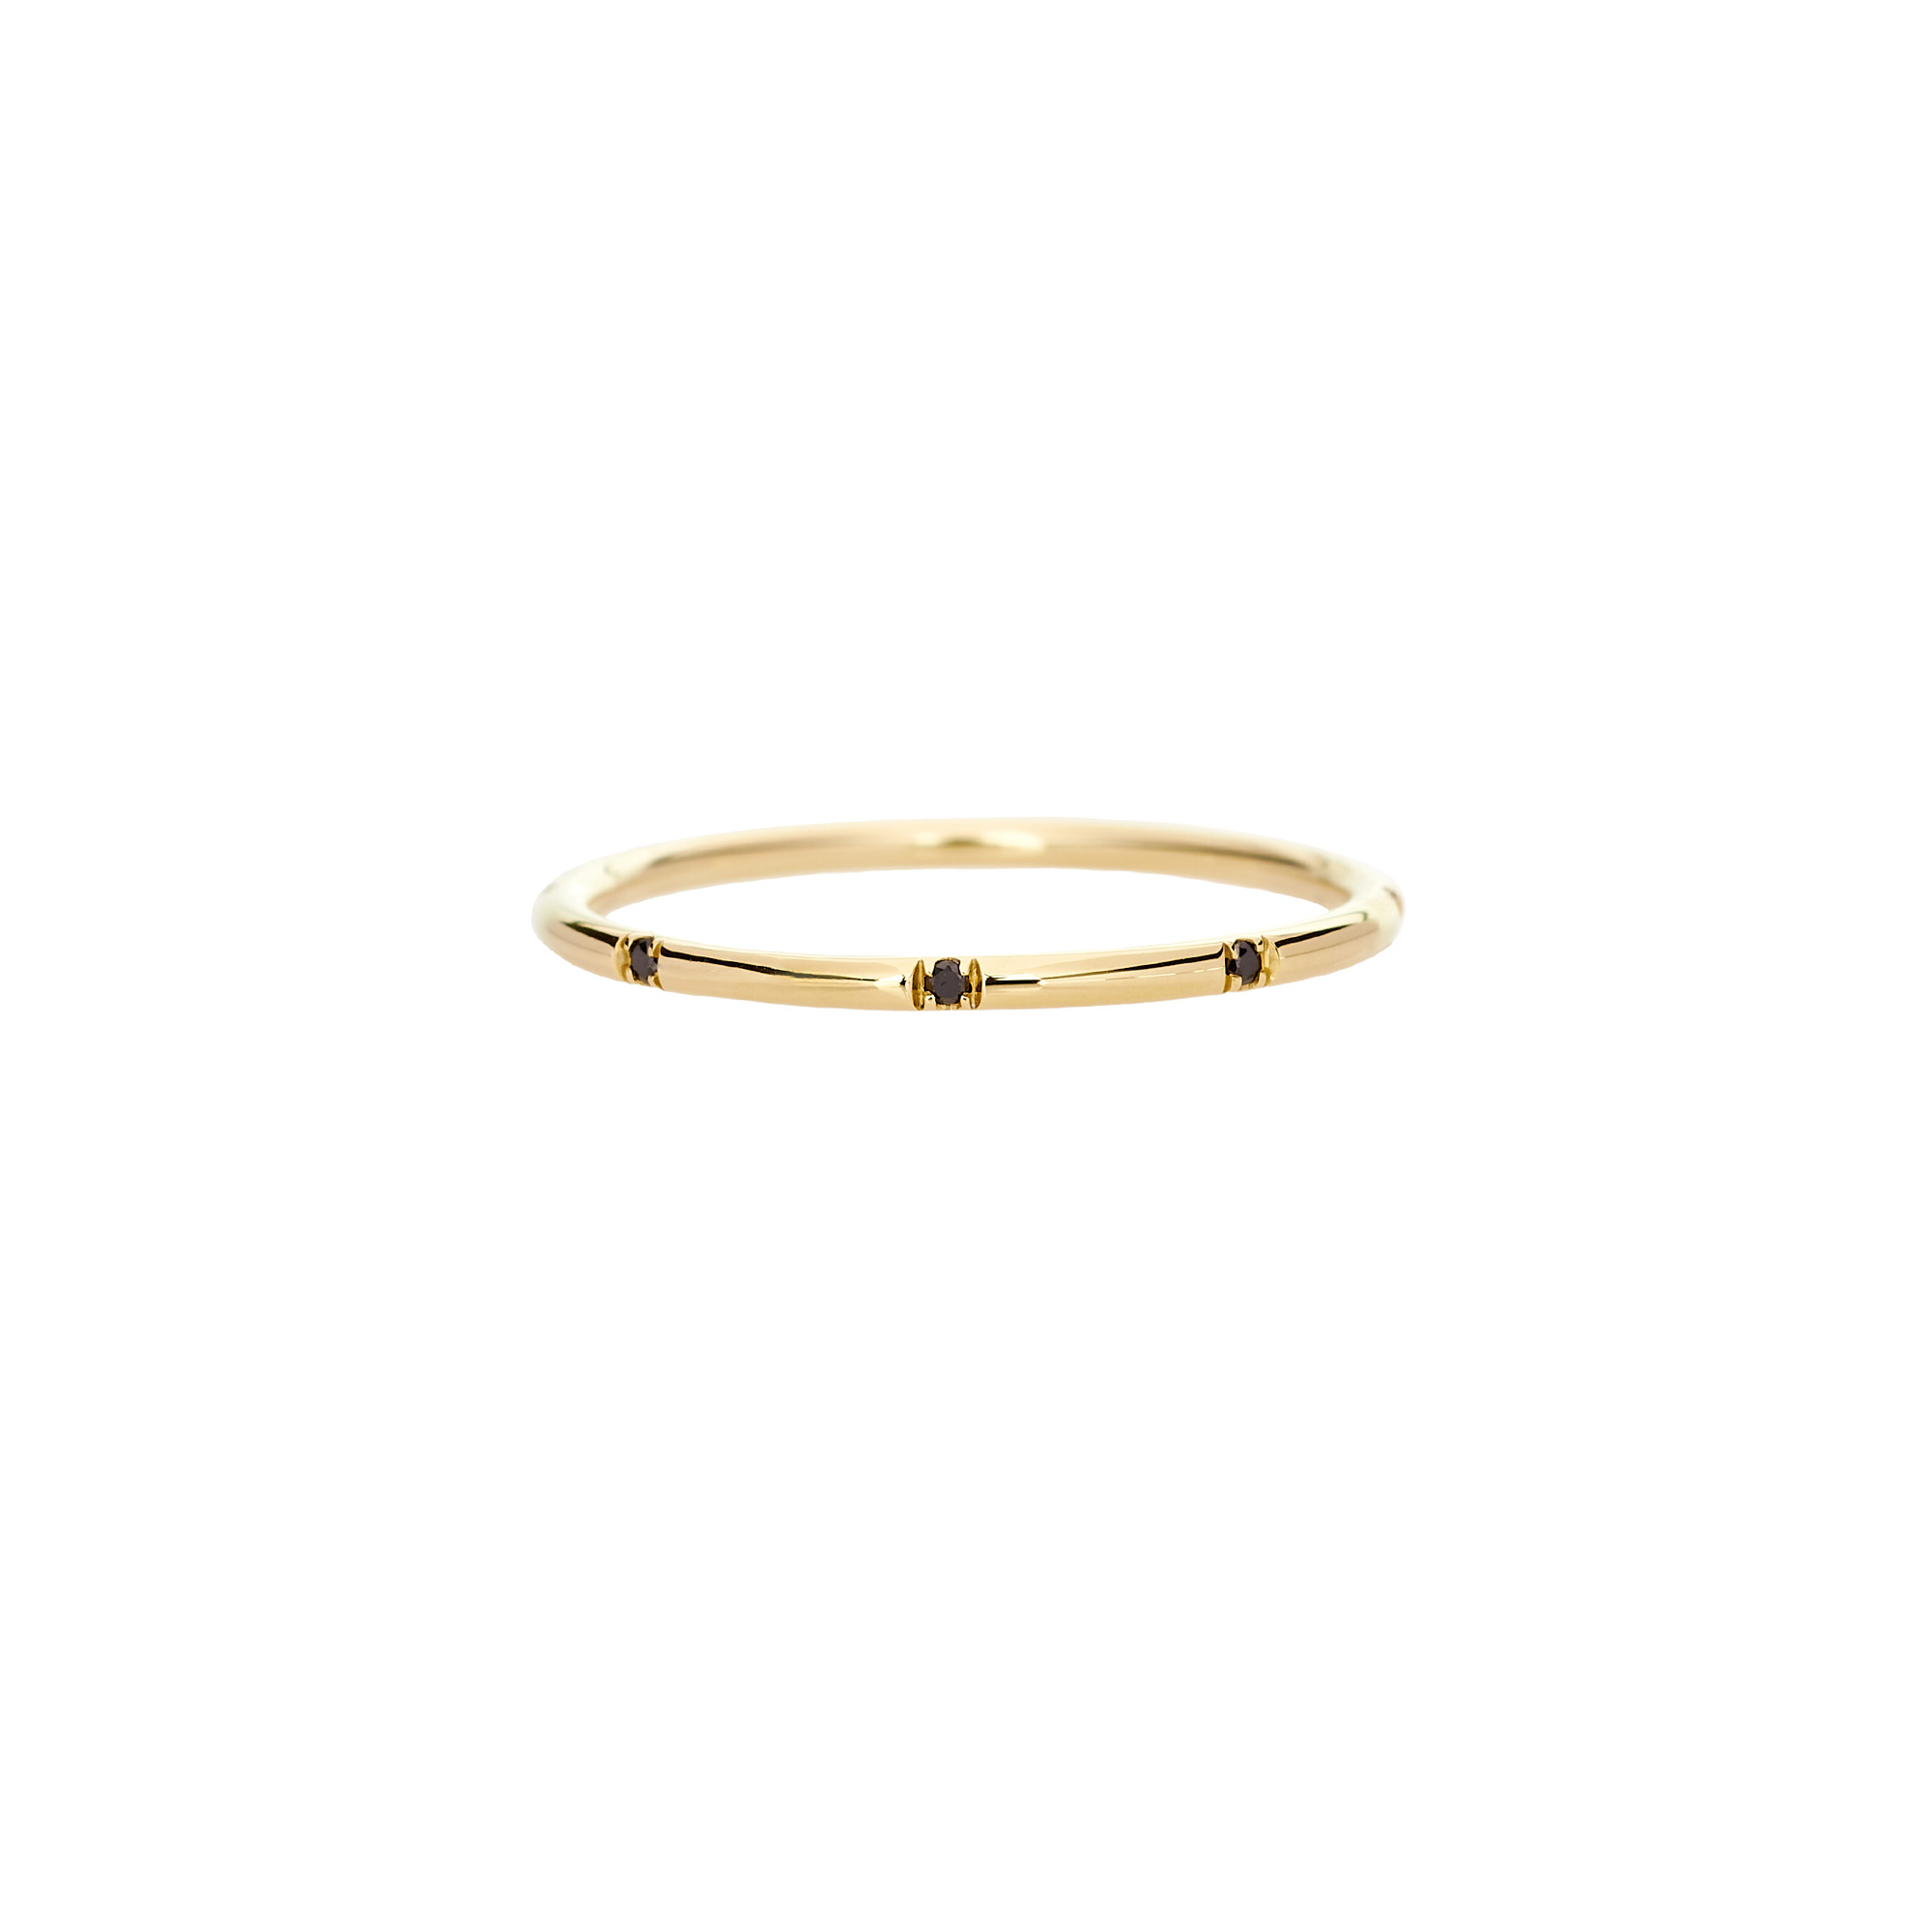 Single Stone Gold Rings Jewellery Designs | Parakkat Jewels